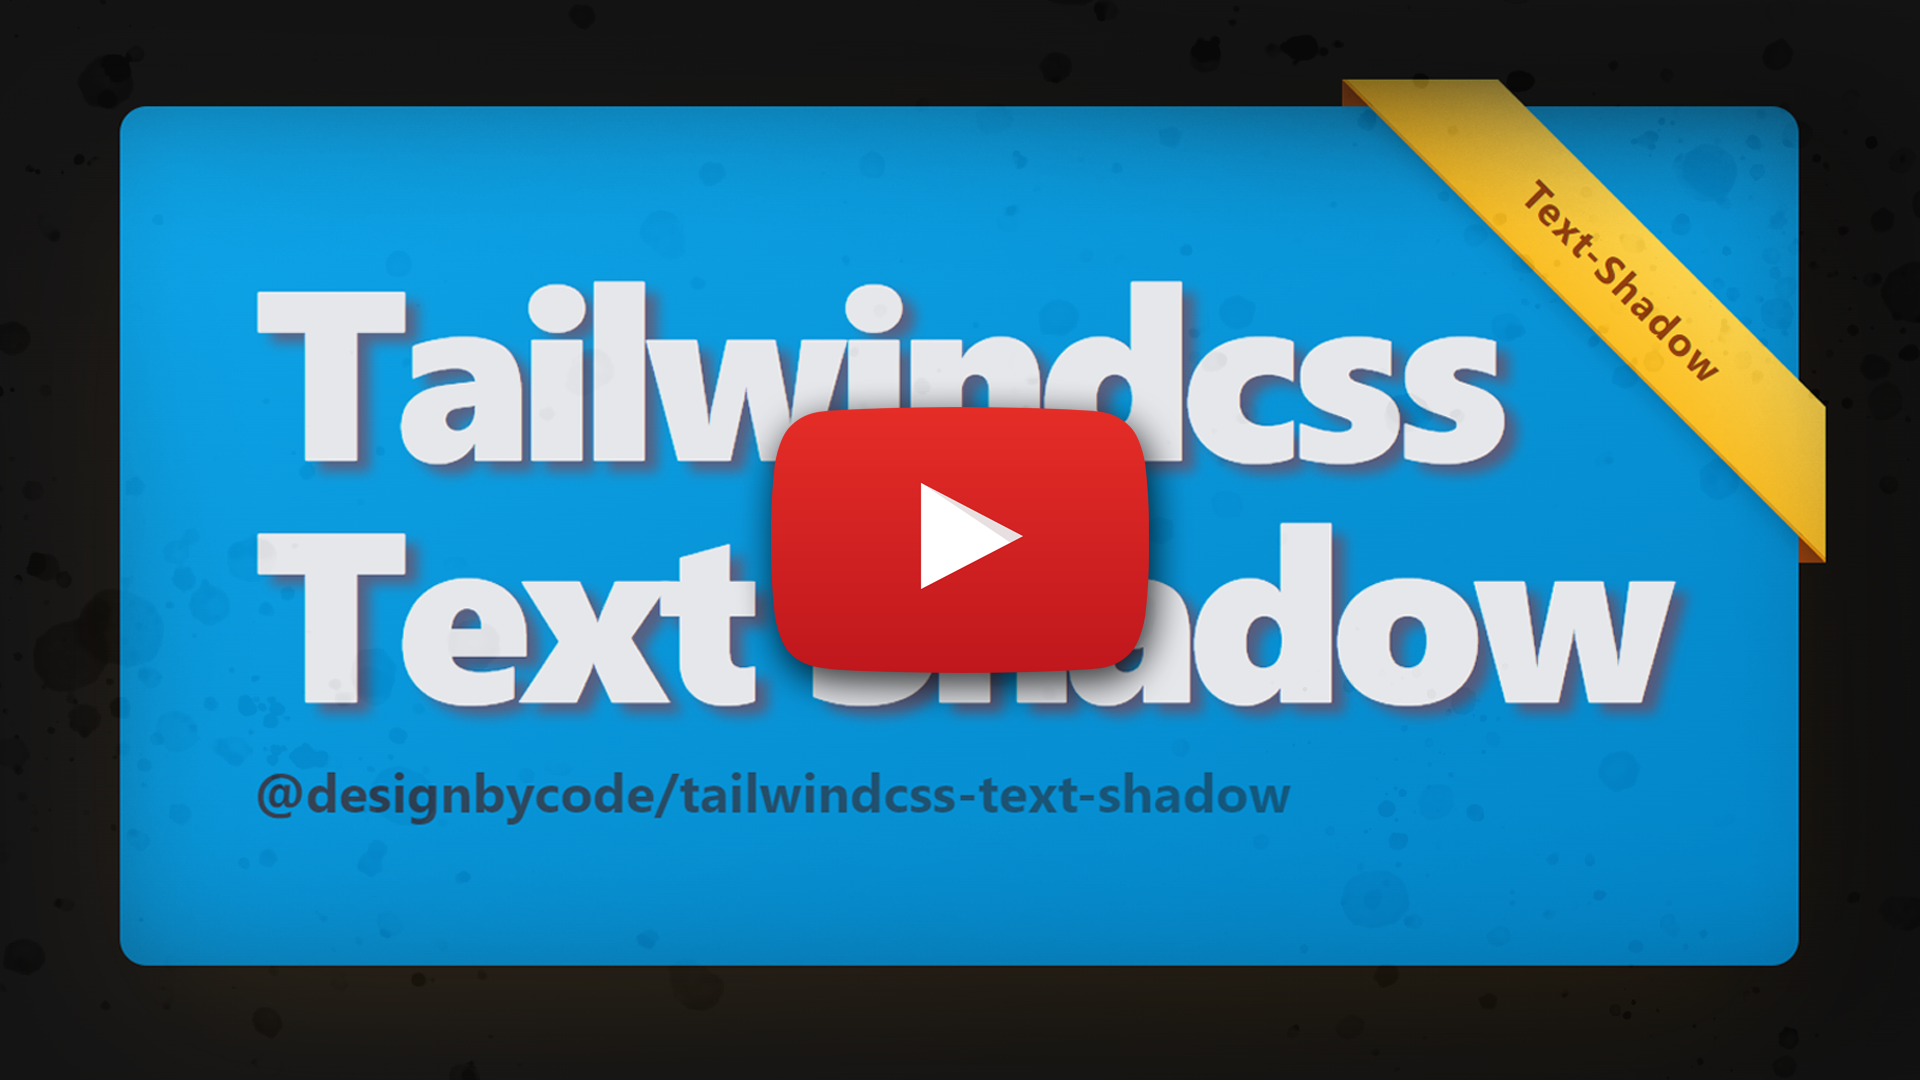 Tailwindcss text-shadow tutorial